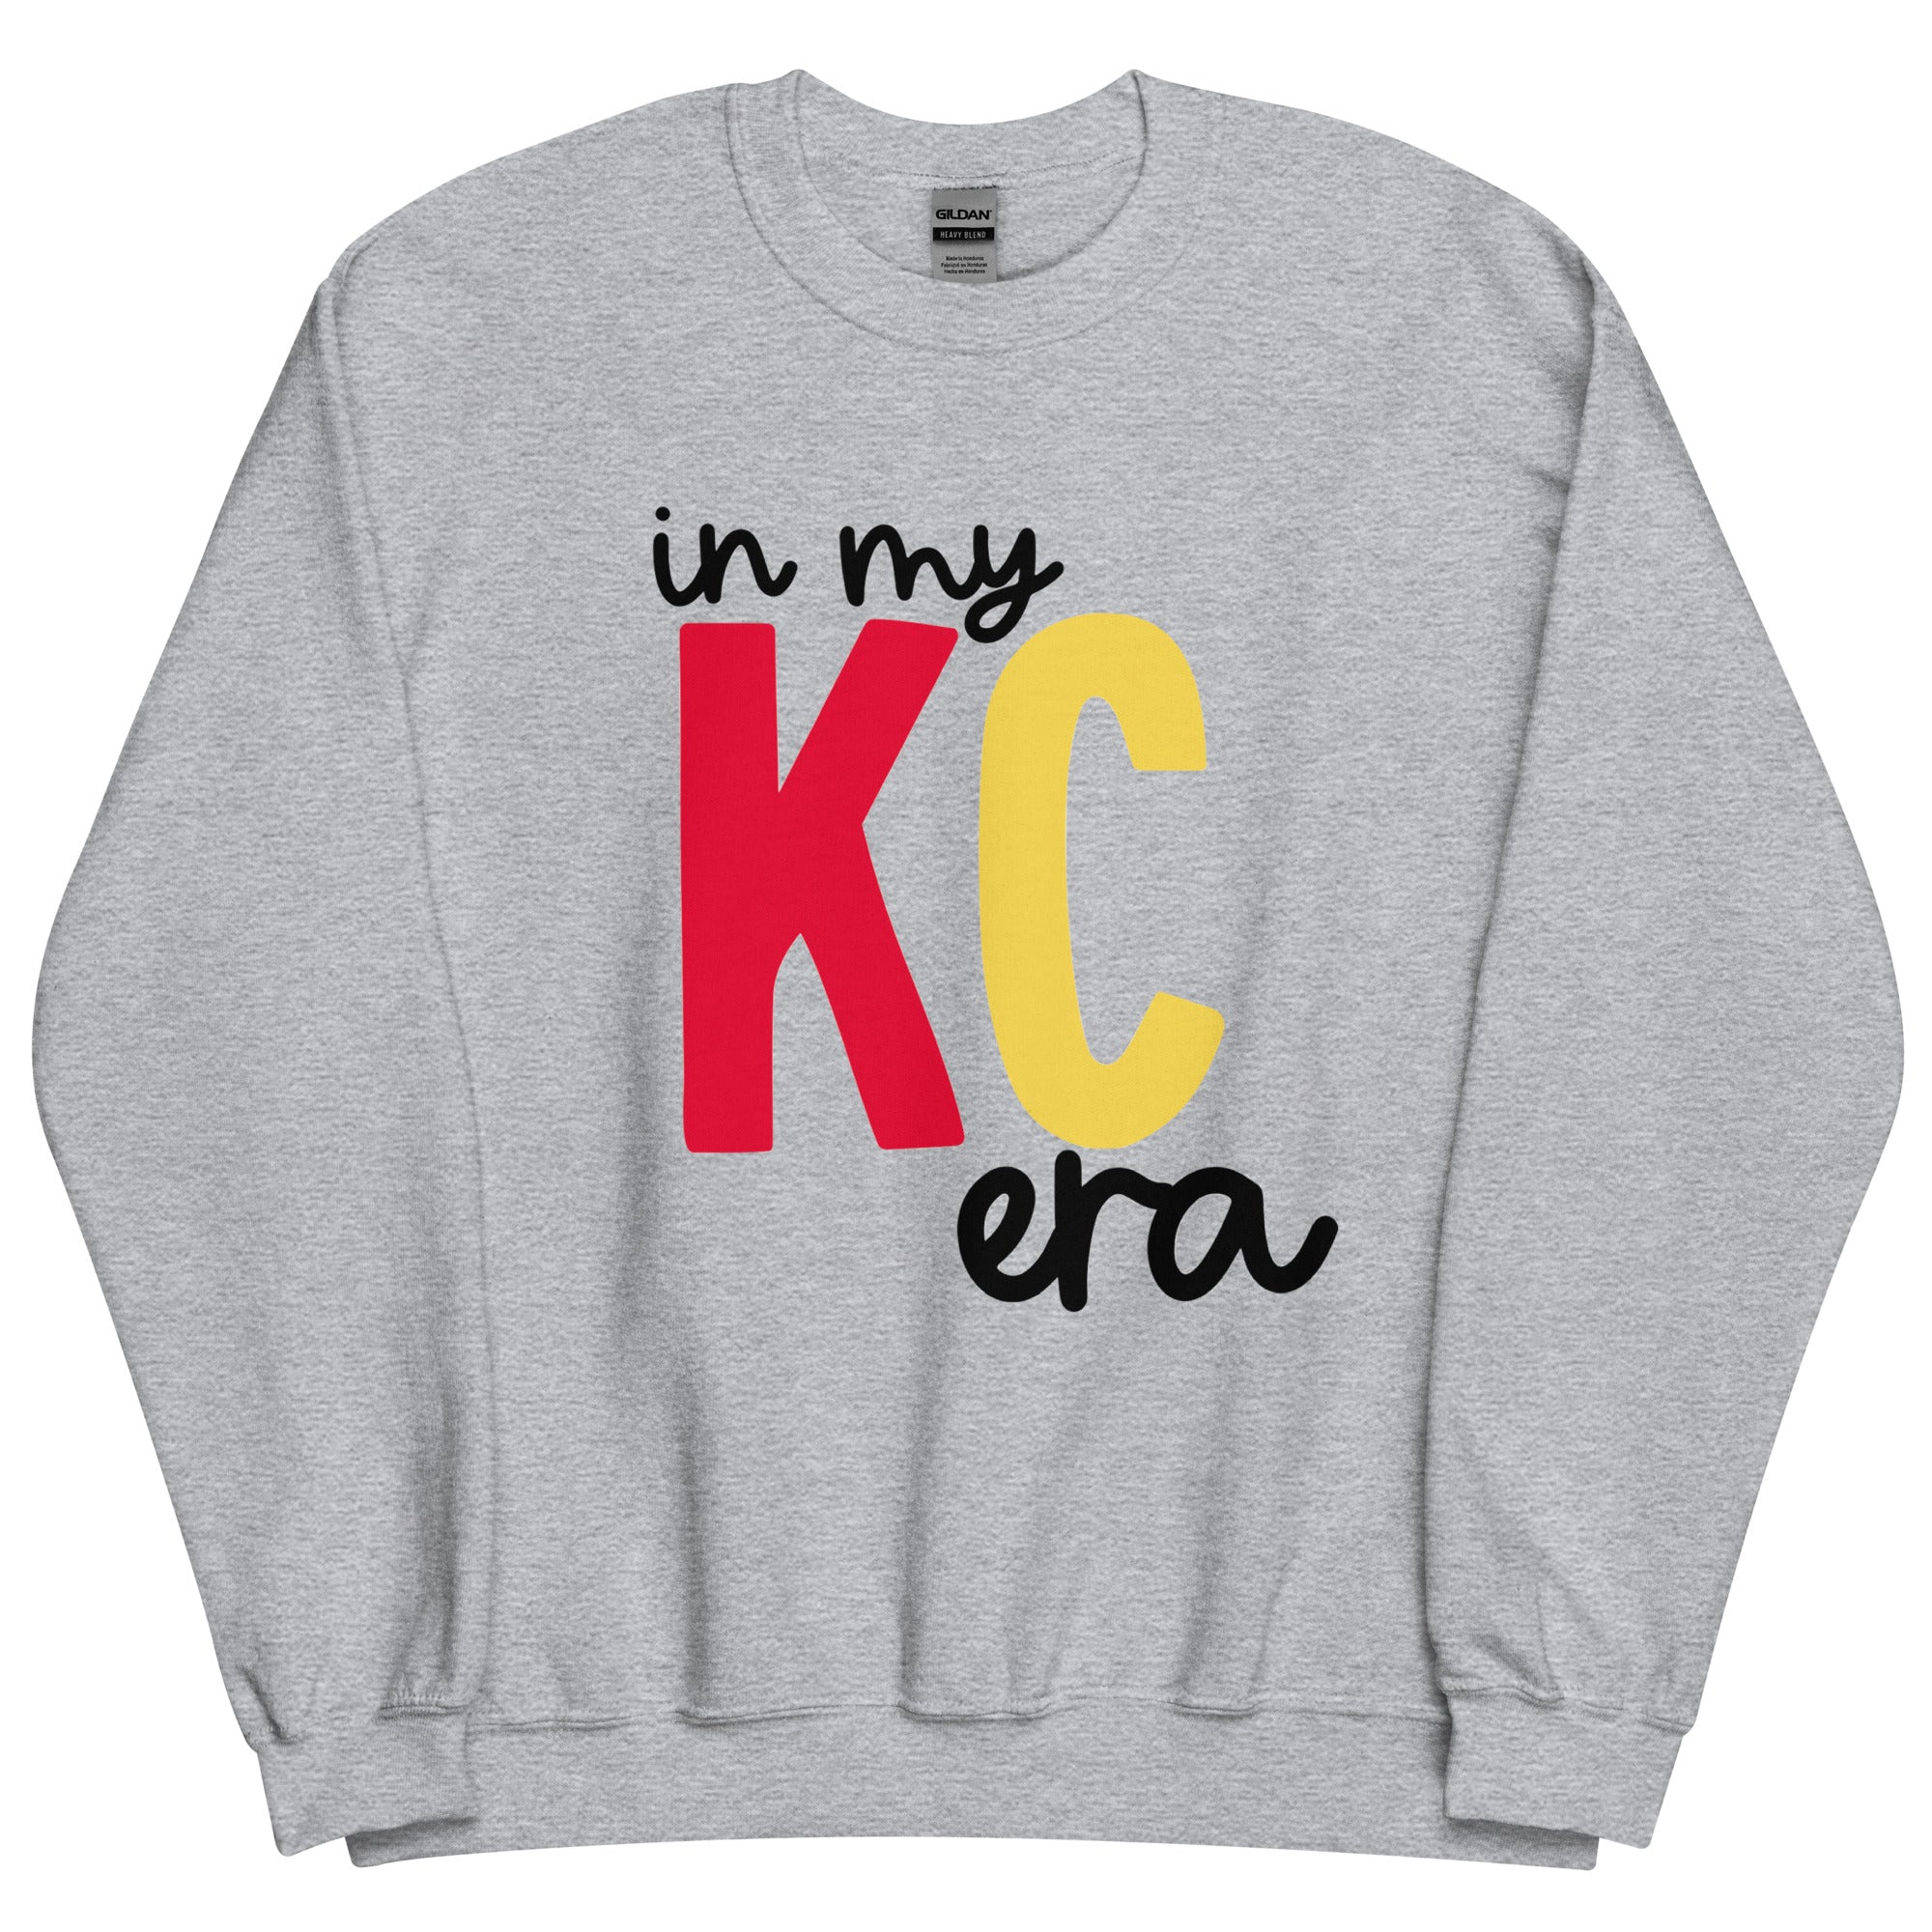 KC Era Sweatshirt